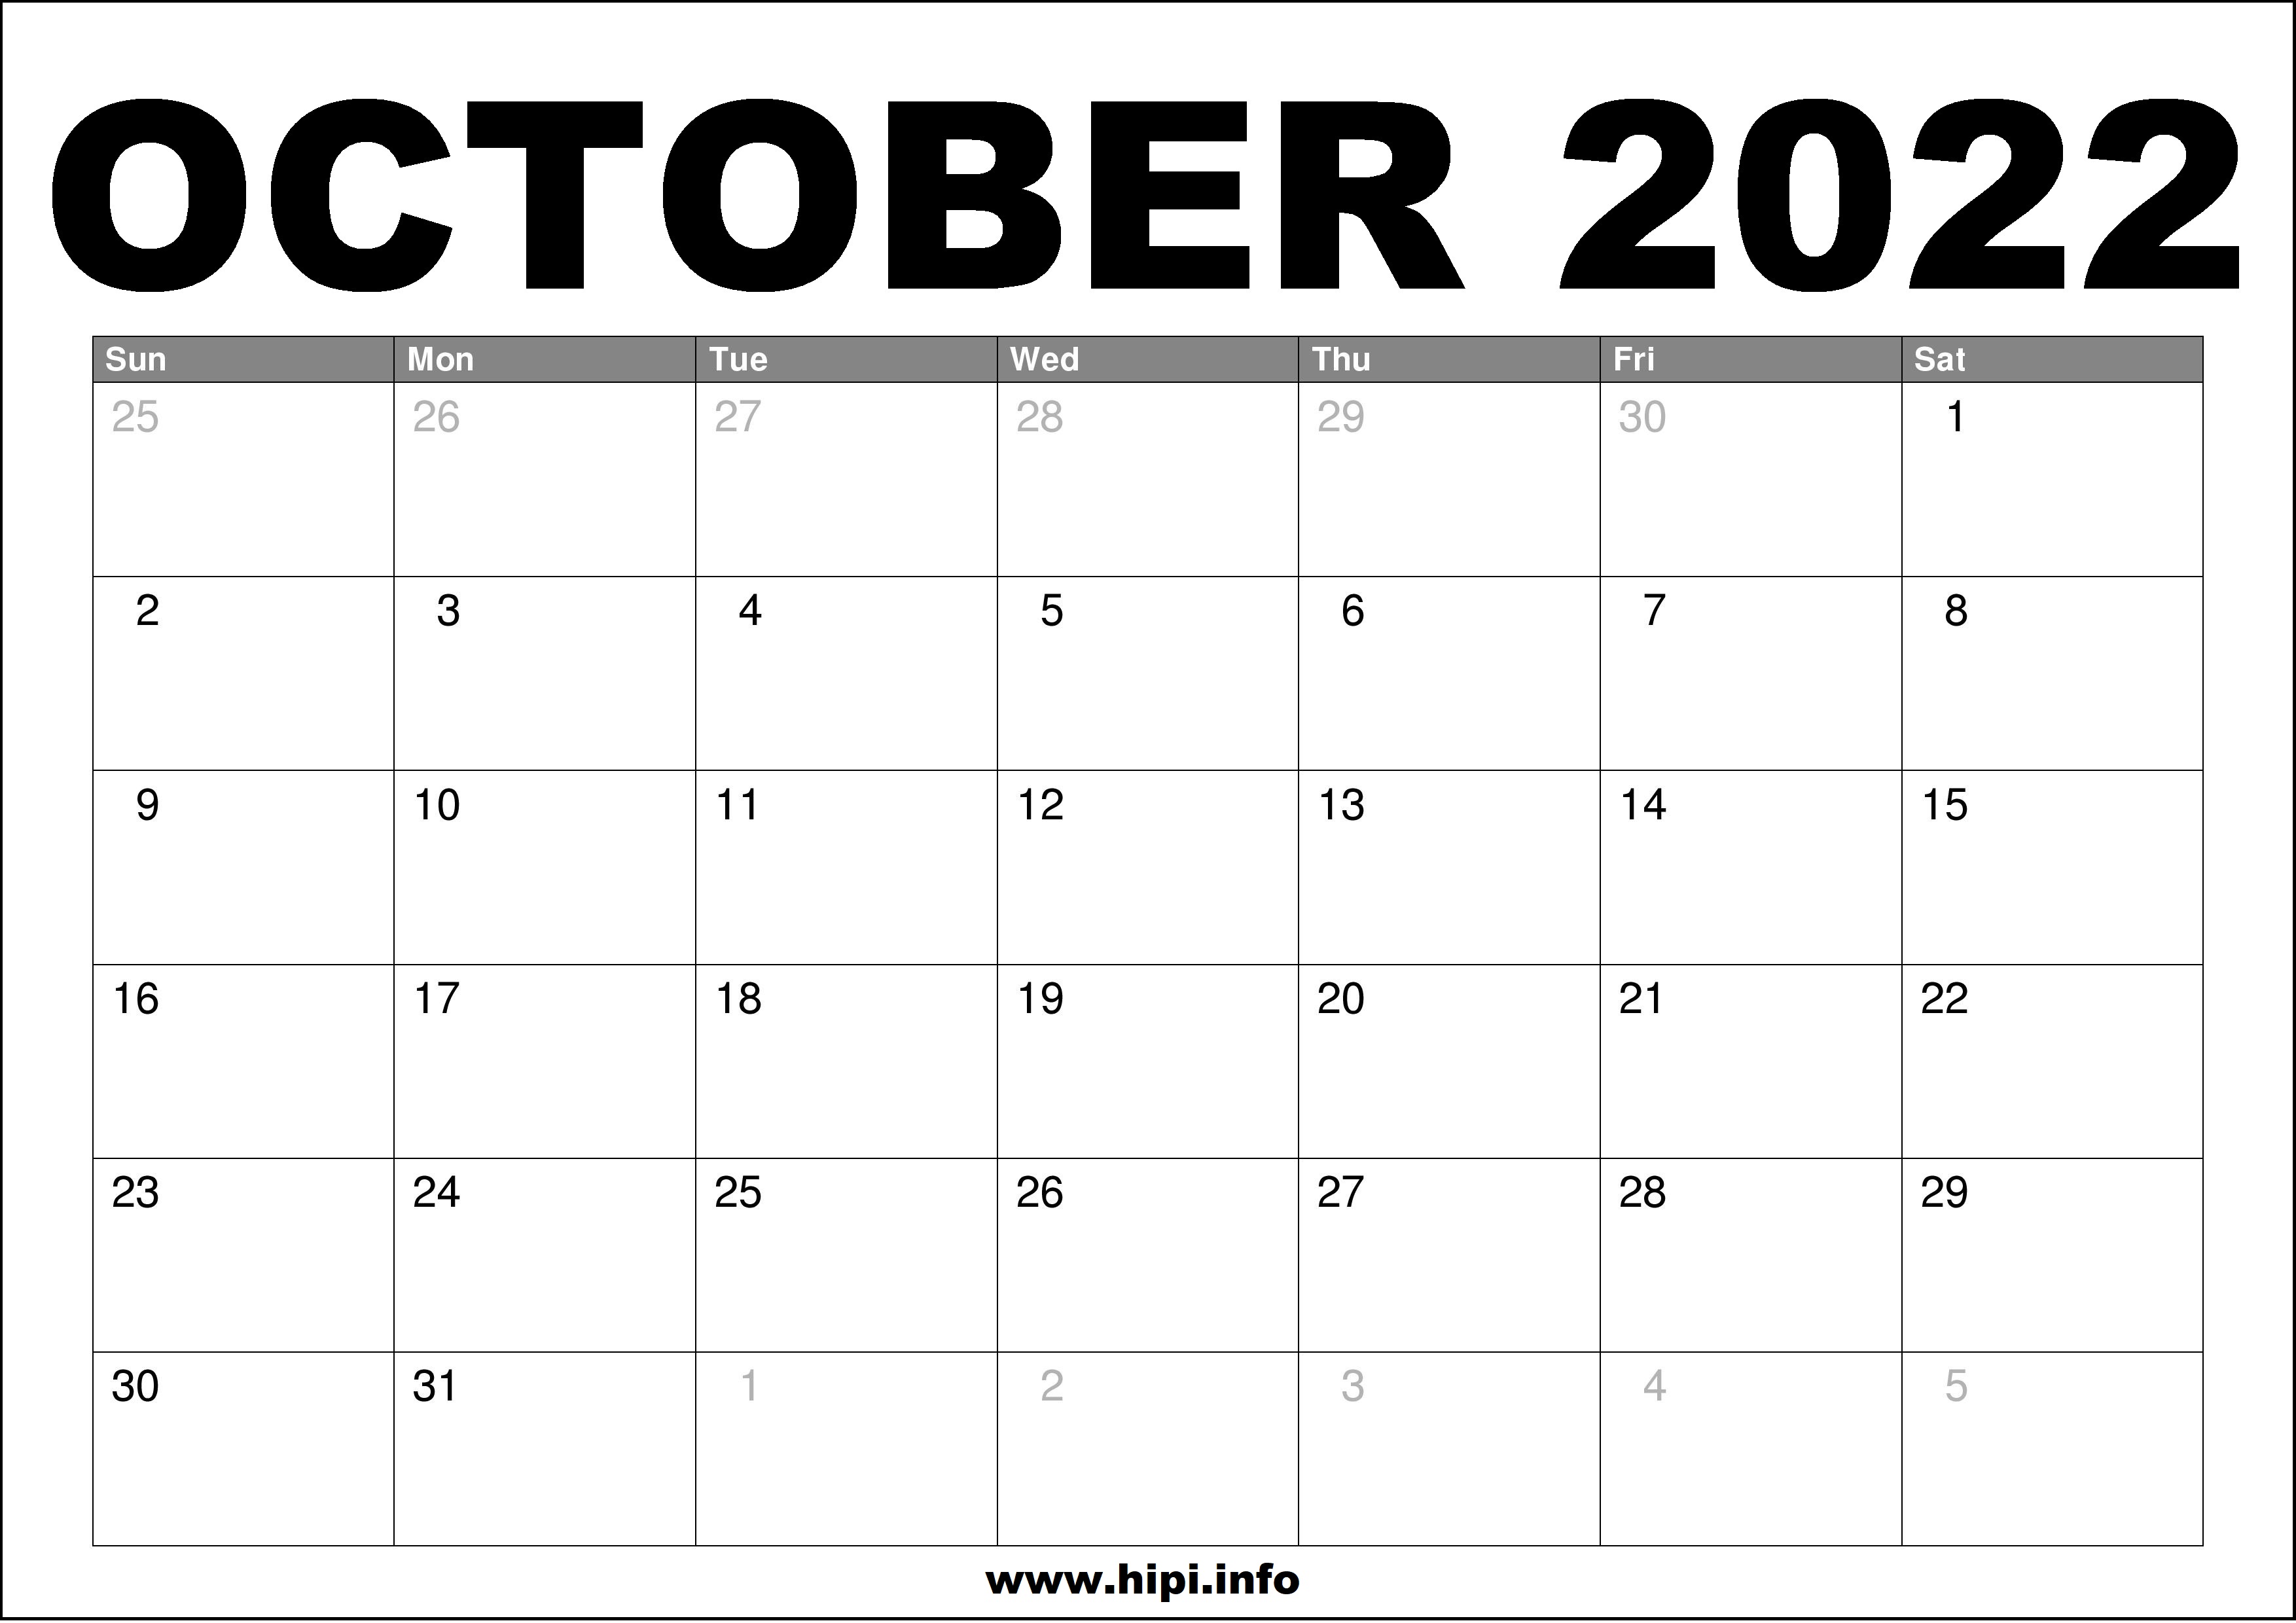 October 2022 Calendar To Print October 2022 Calendar Printable Free - Hipi.info | Calendars Printable Free